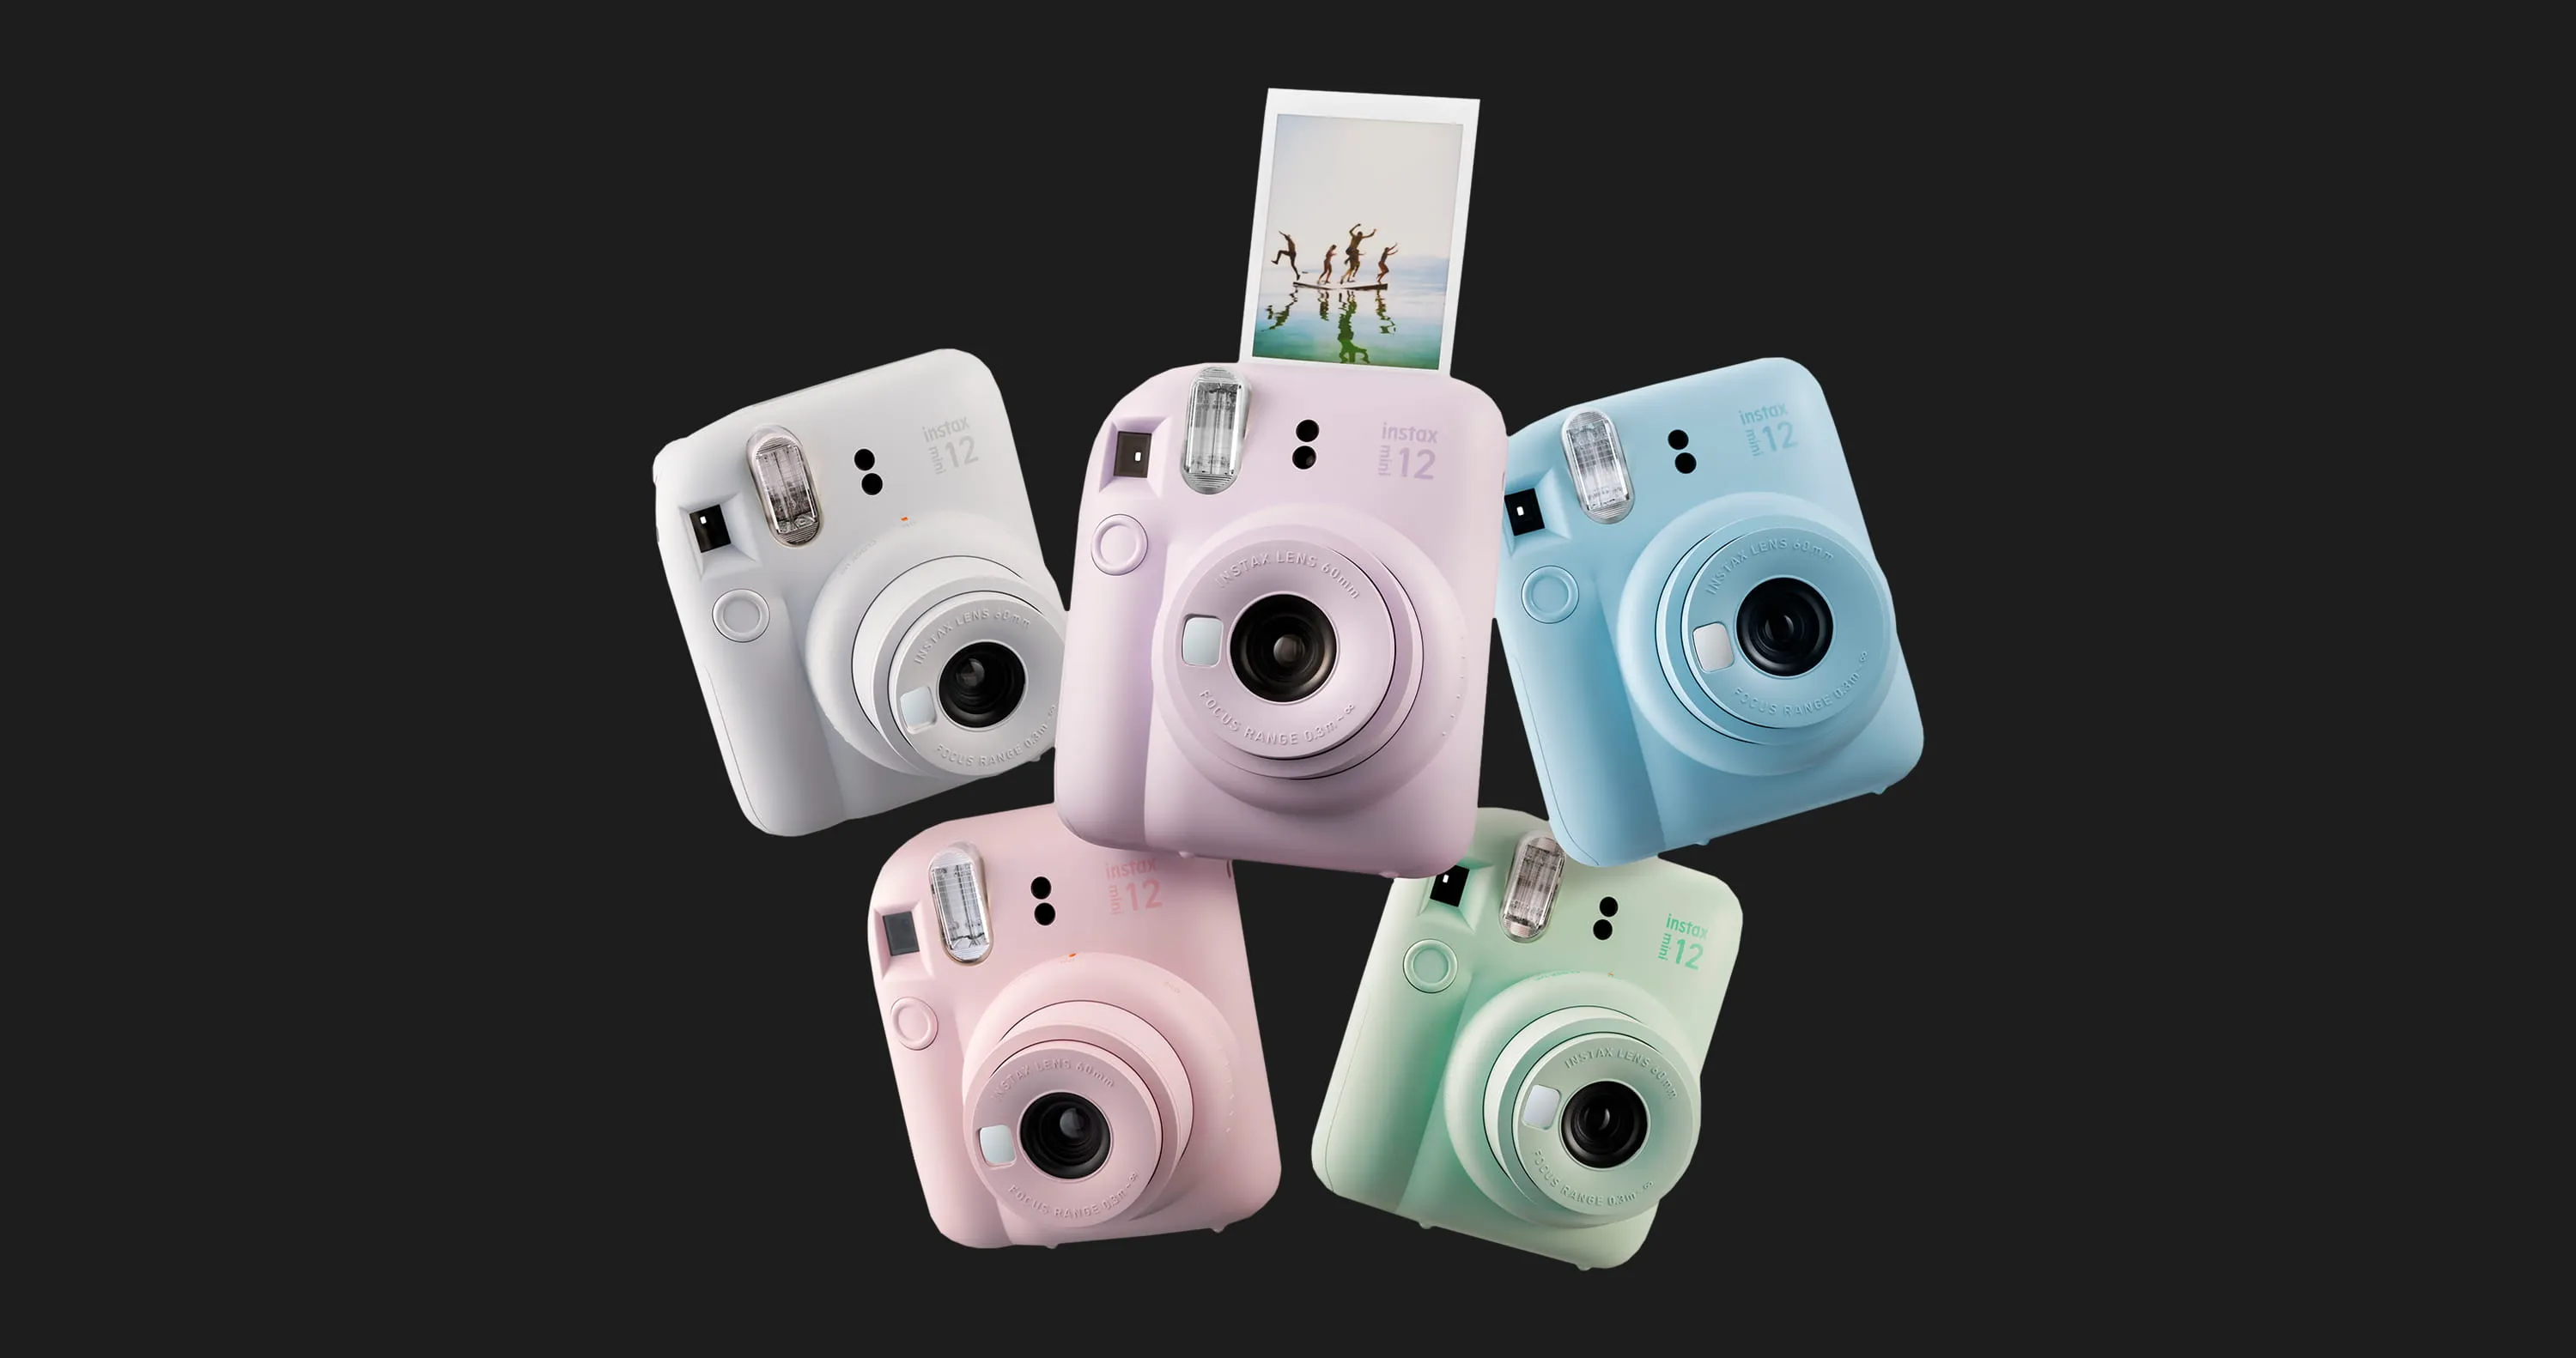 Фотокамера Fujifilm INSTAX Mini 12 (Clay White)